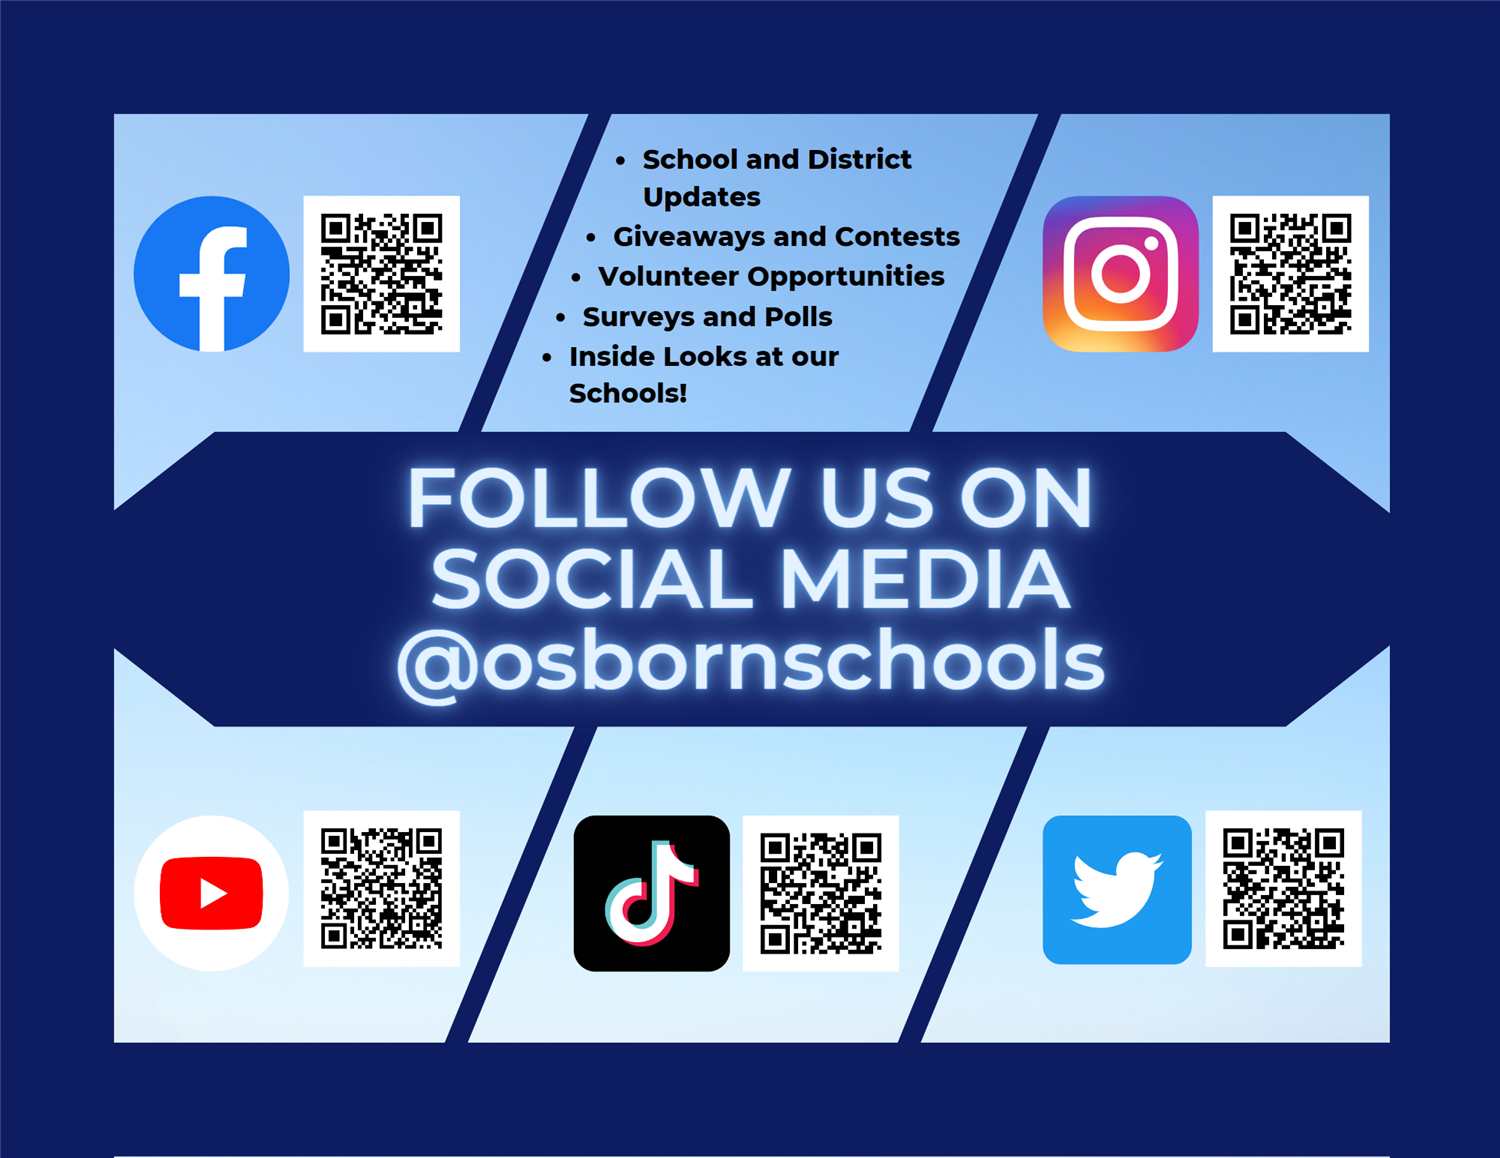 Follow us on social media @ osbornschools - Facebook, instagram, youtube, tiktok, and twitter